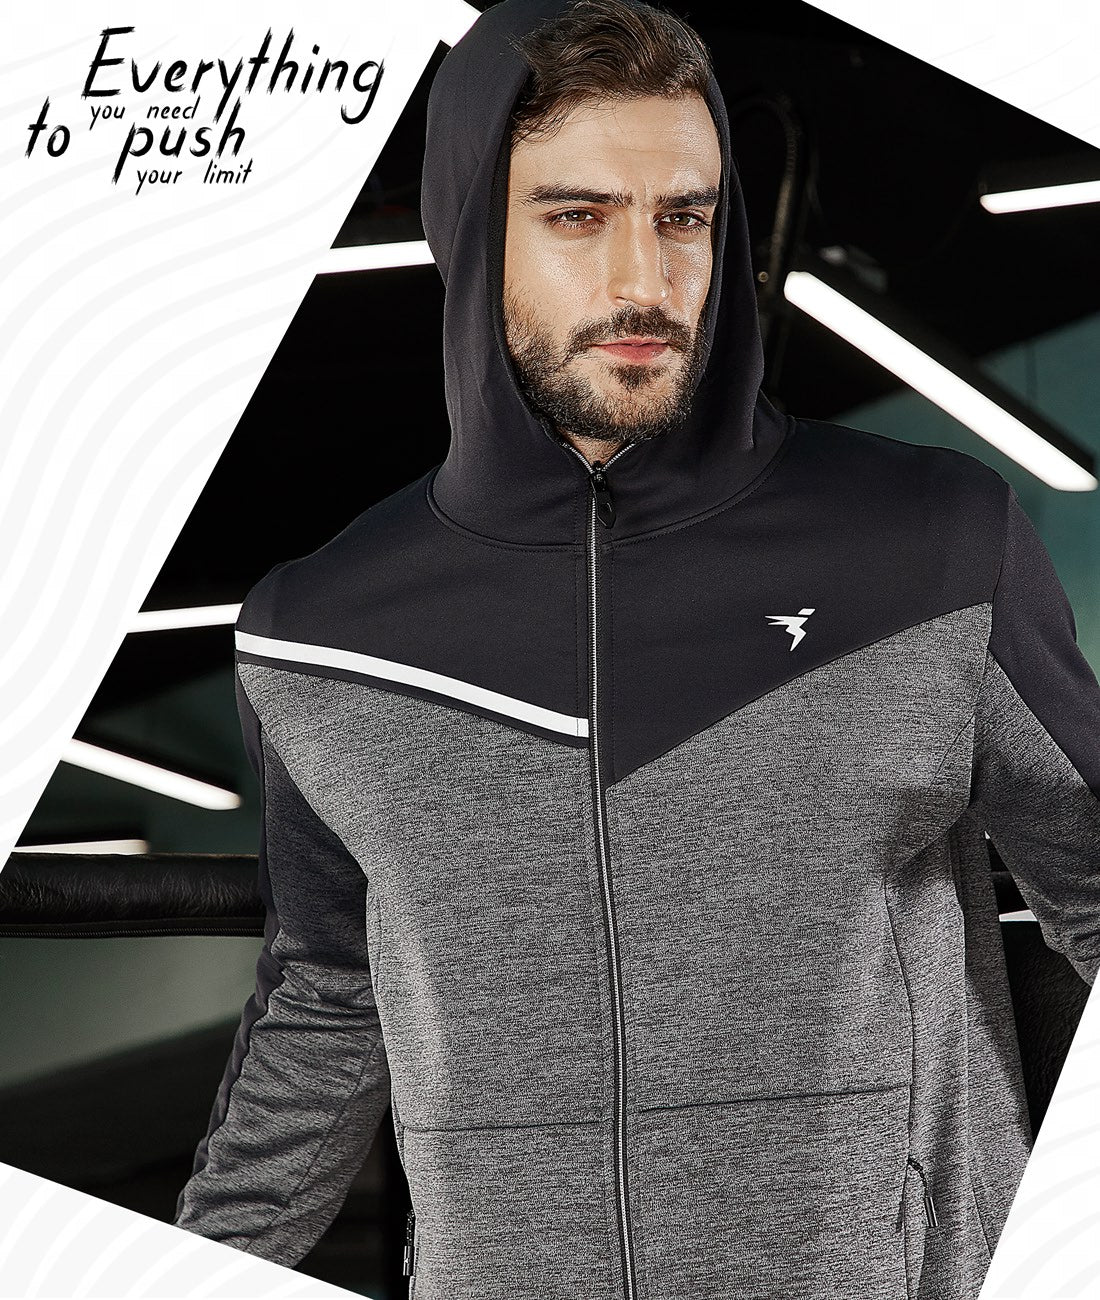 TechnoSport Full Sleeve Dry Fit Hoodie Jacket for Men PL-65 (Light Grey)